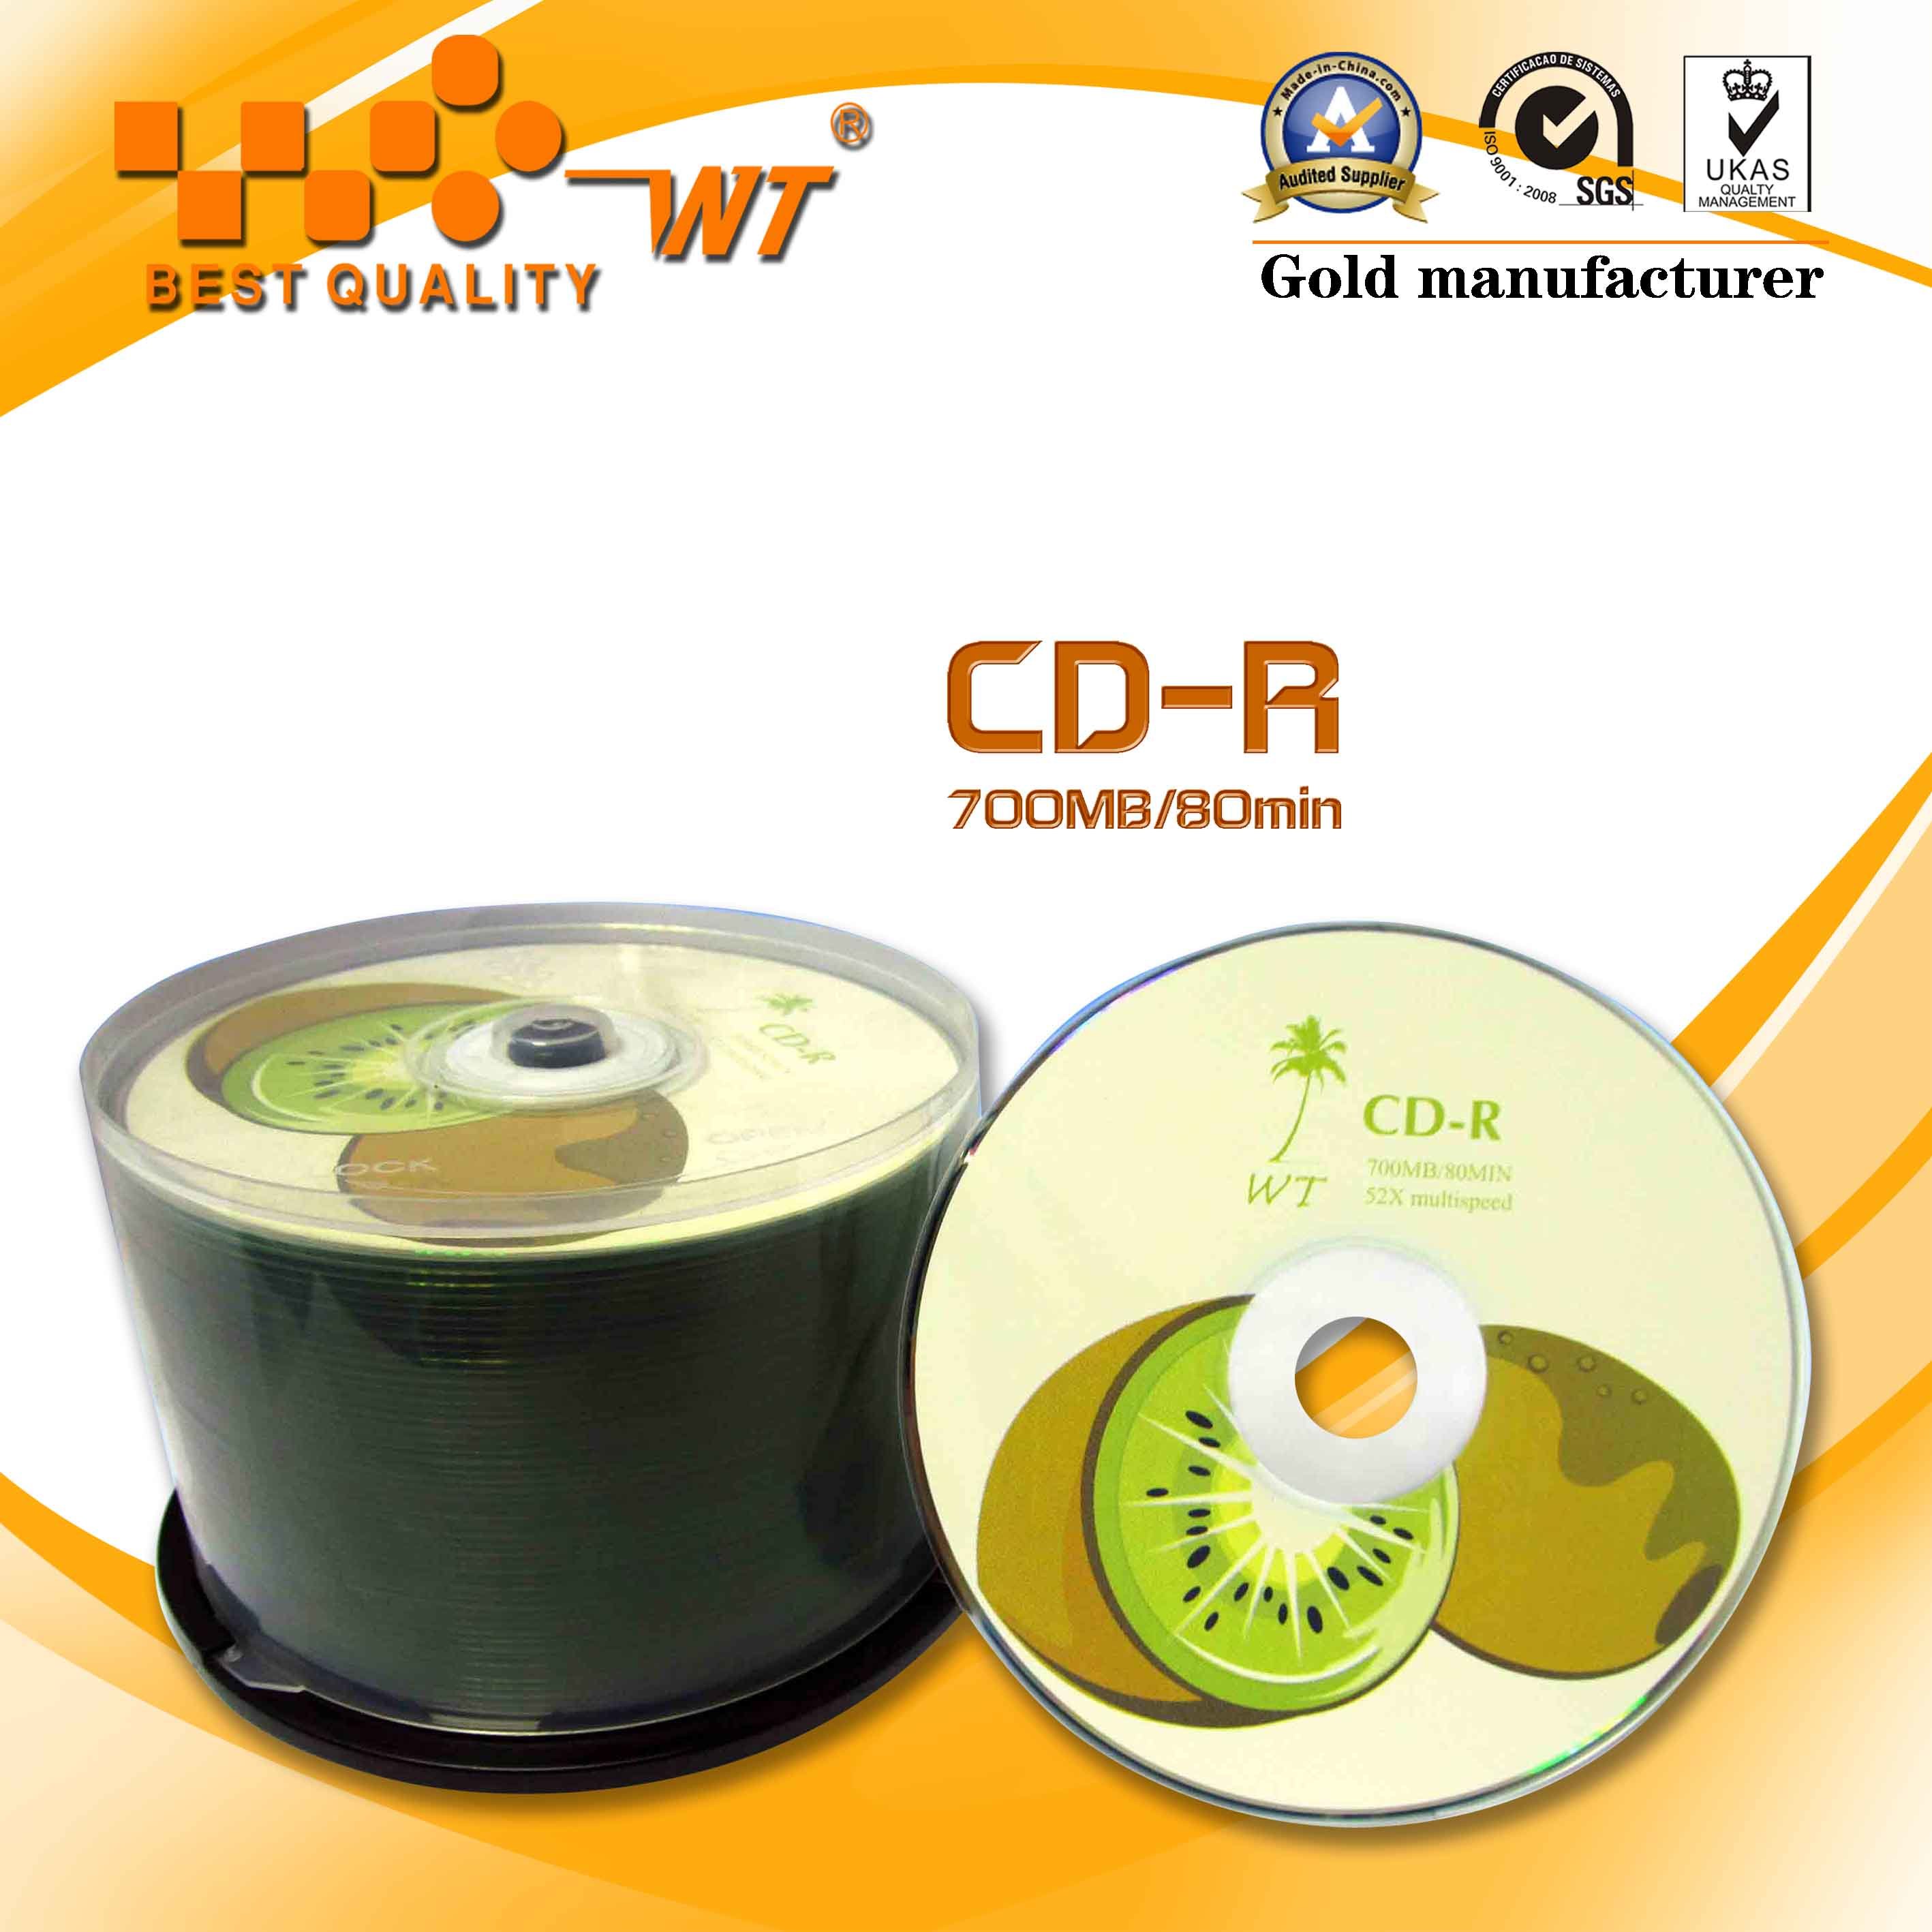 Blank CD-R 52x/700MB/80min (AS-202-CDR)